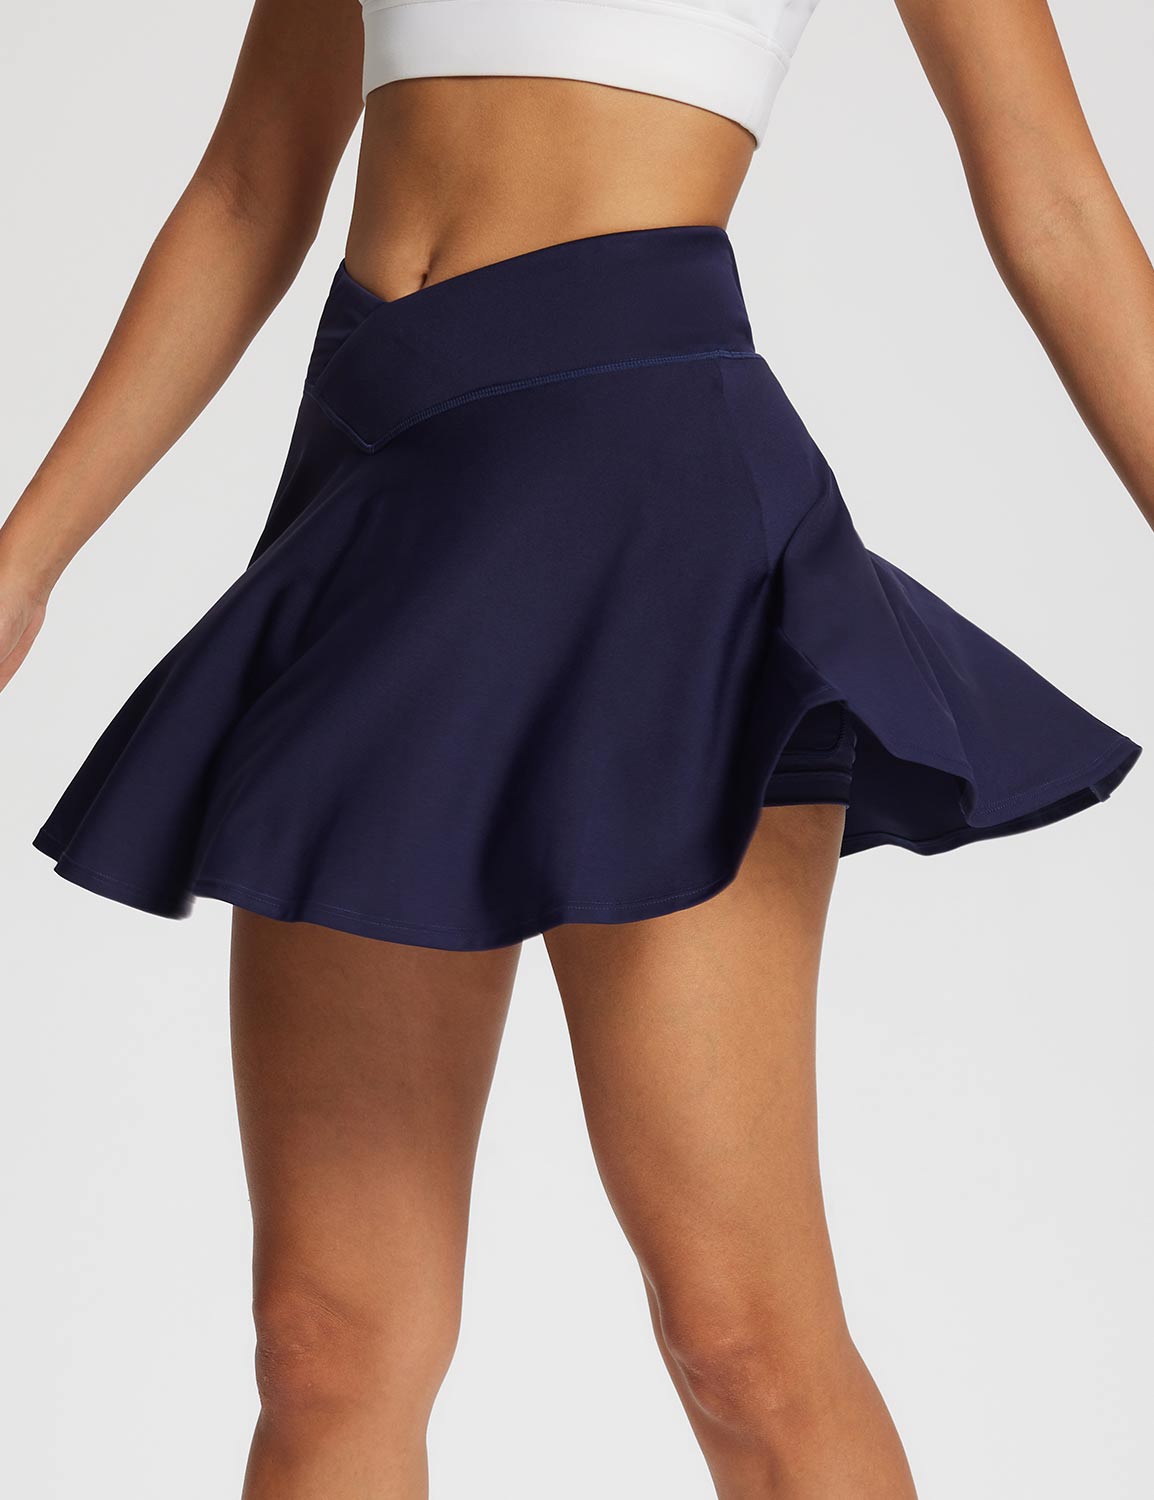 Baleaf Women's High-Rise Pleated Tennis Skirts w Ball Pockets Peacoat Details